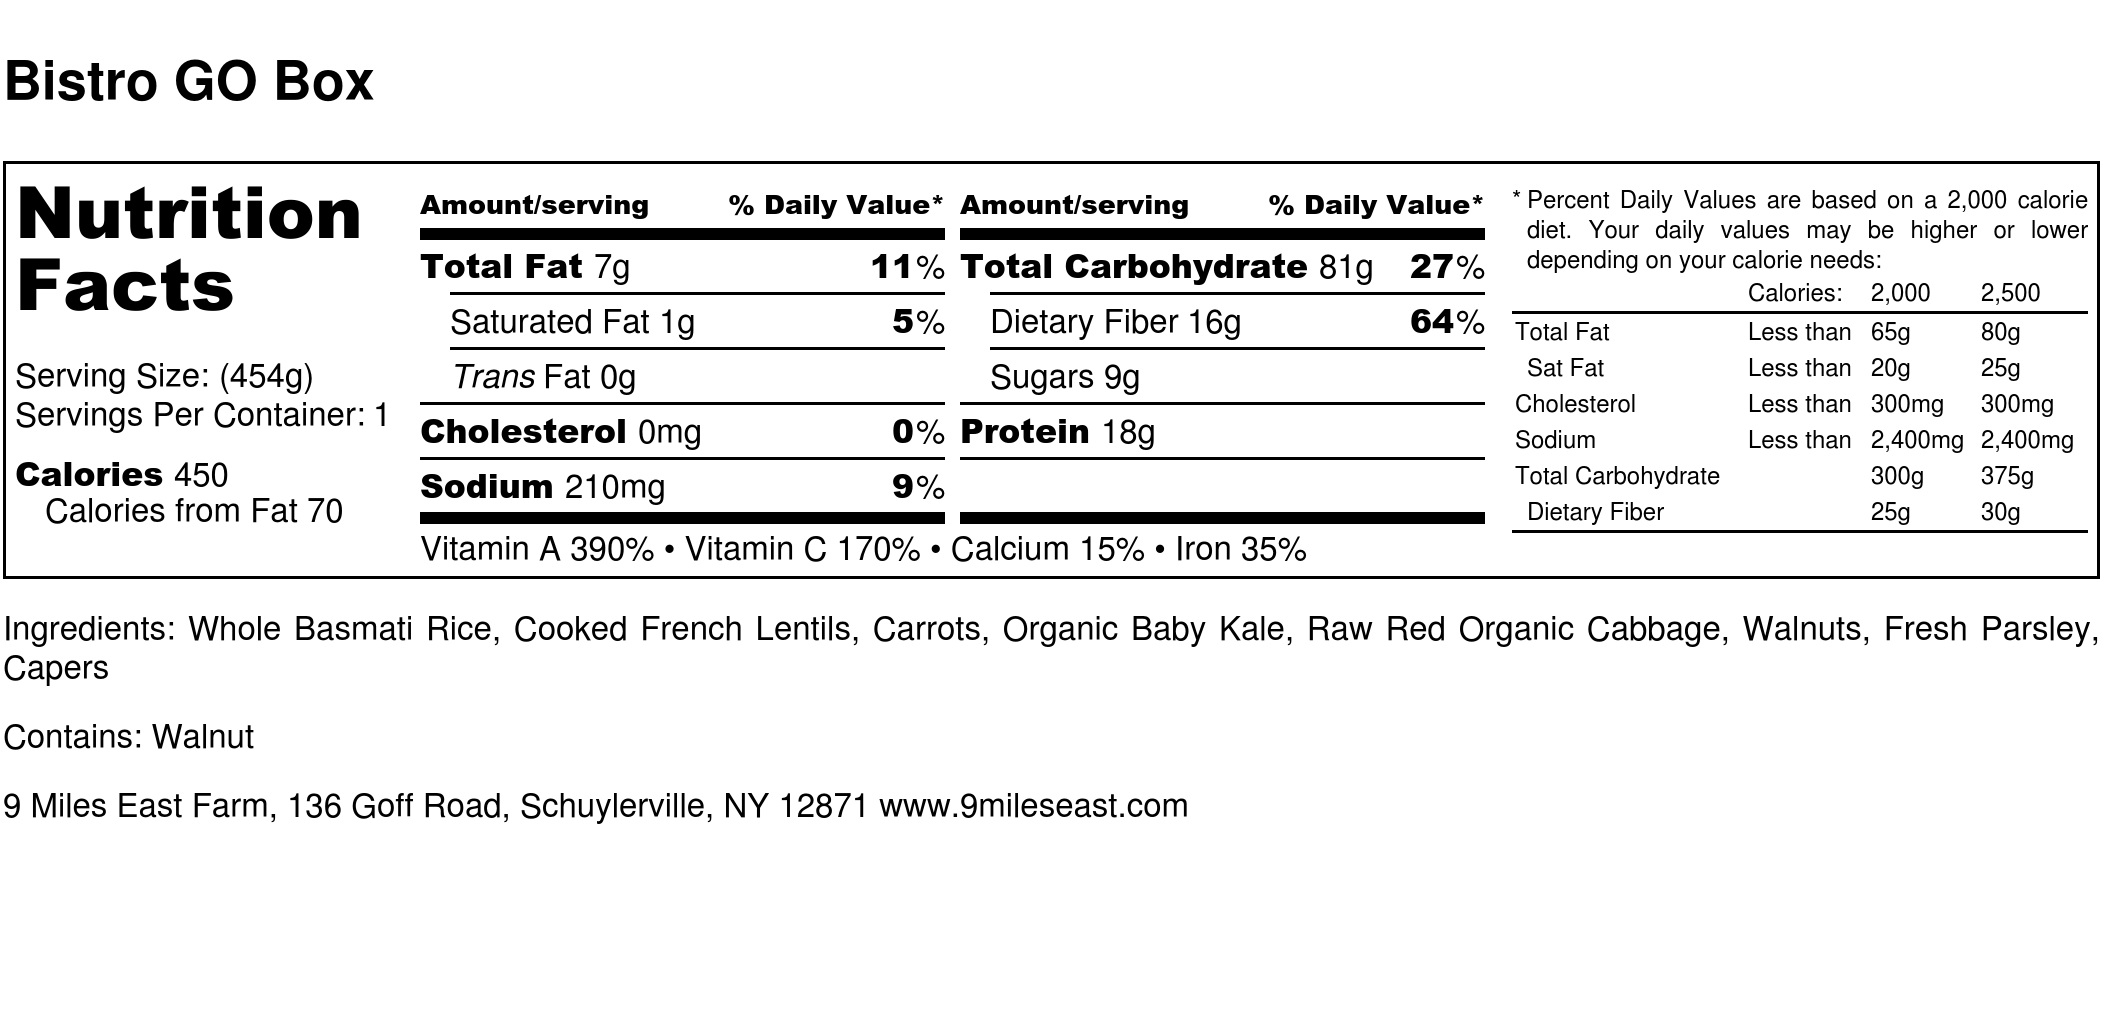 Bistro GO Box - Nutrition Label.jpg